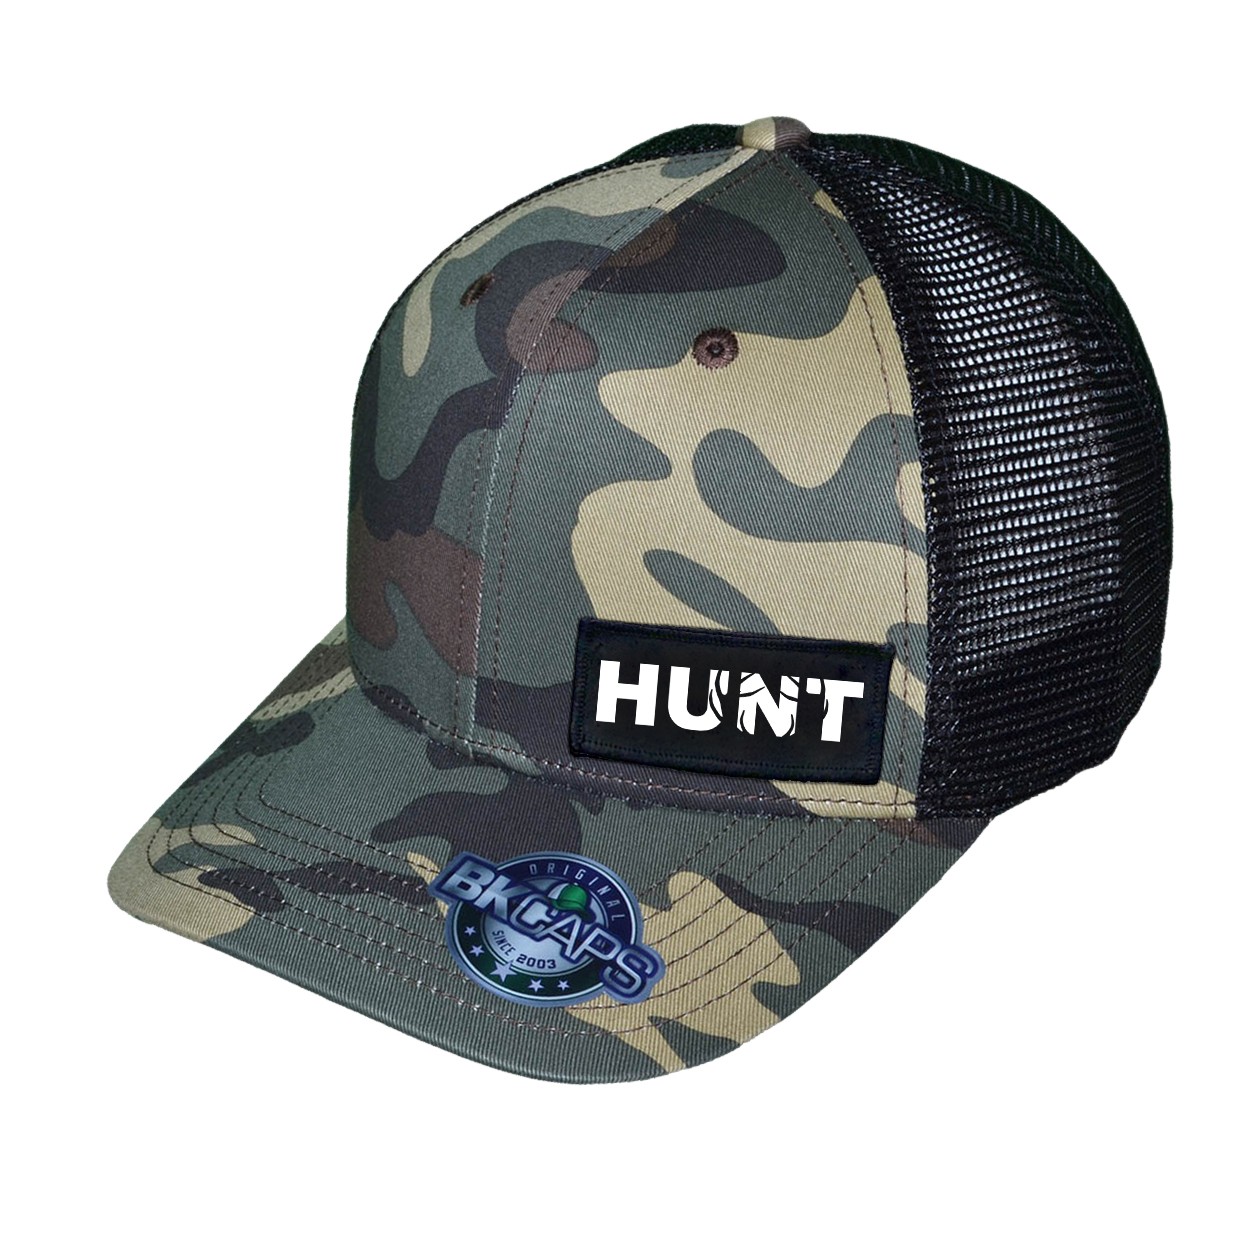 Hunt Rack Logo Night Out Woven Patch Mesh Snapback Trucker Hat Khaki/Camo (White Logo)